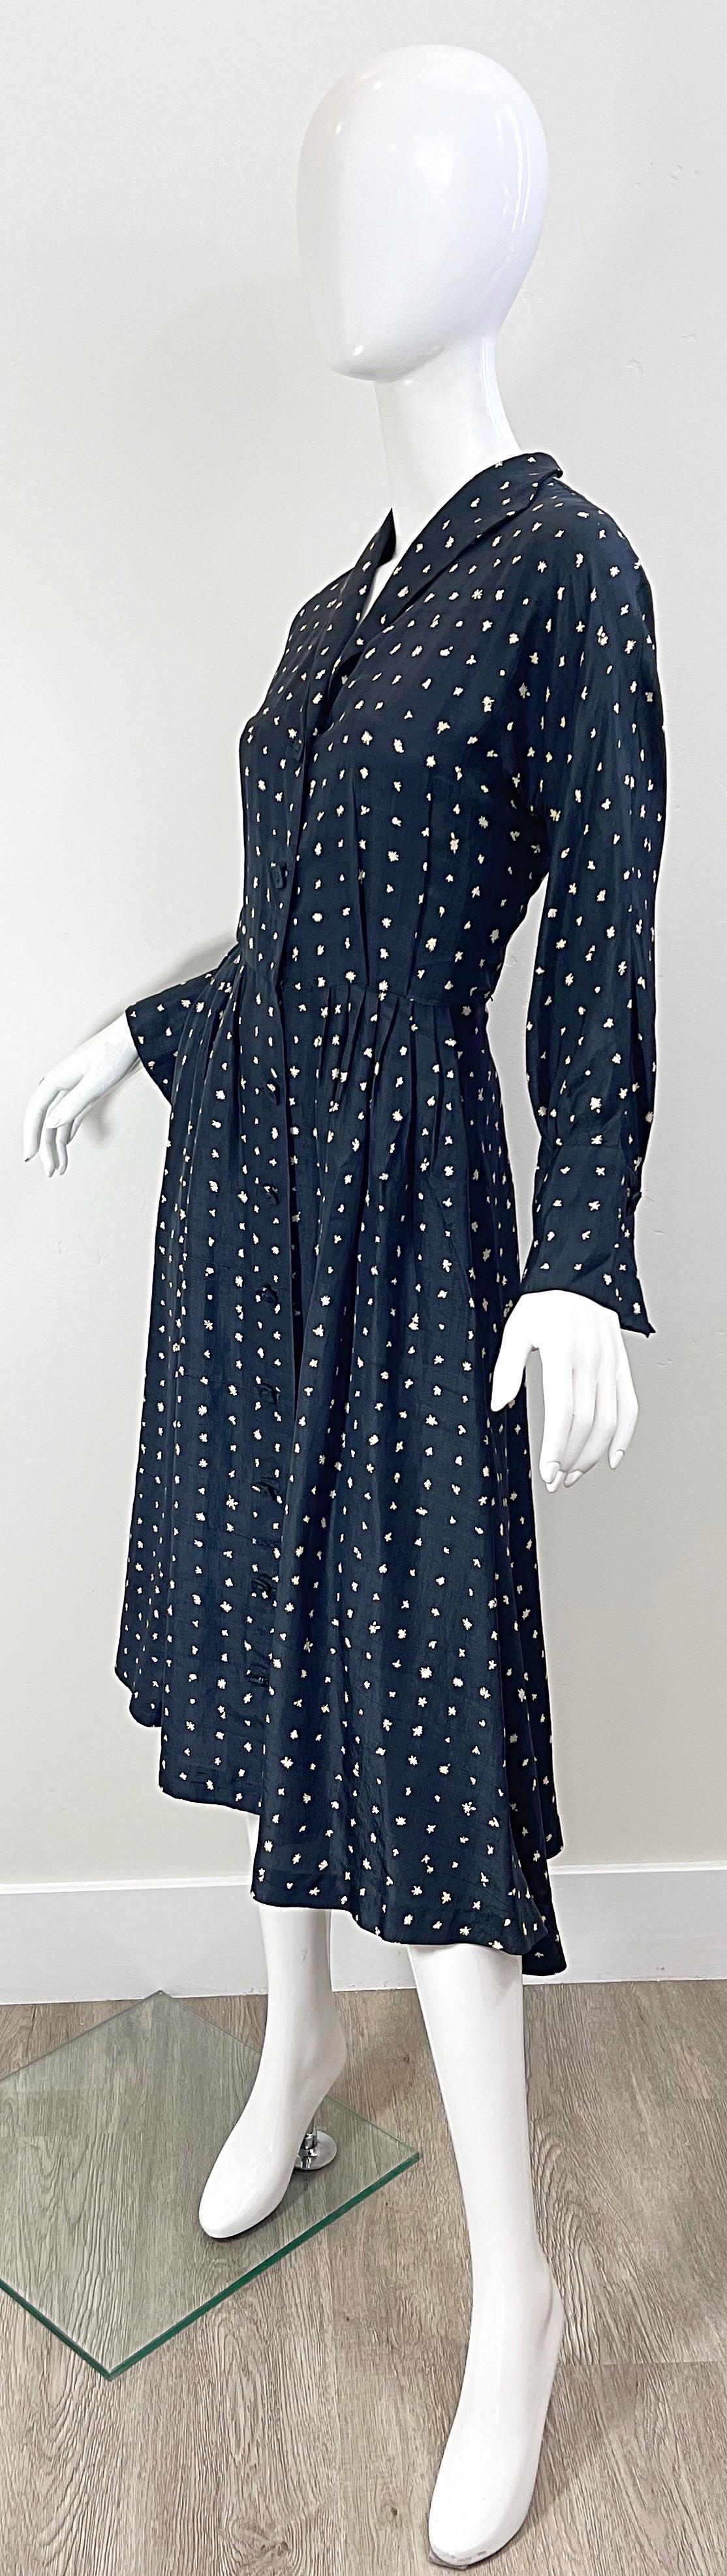 1950s Roberta Lee Originals Black and White Flower Print Vintage 50s Dress For Sale 6